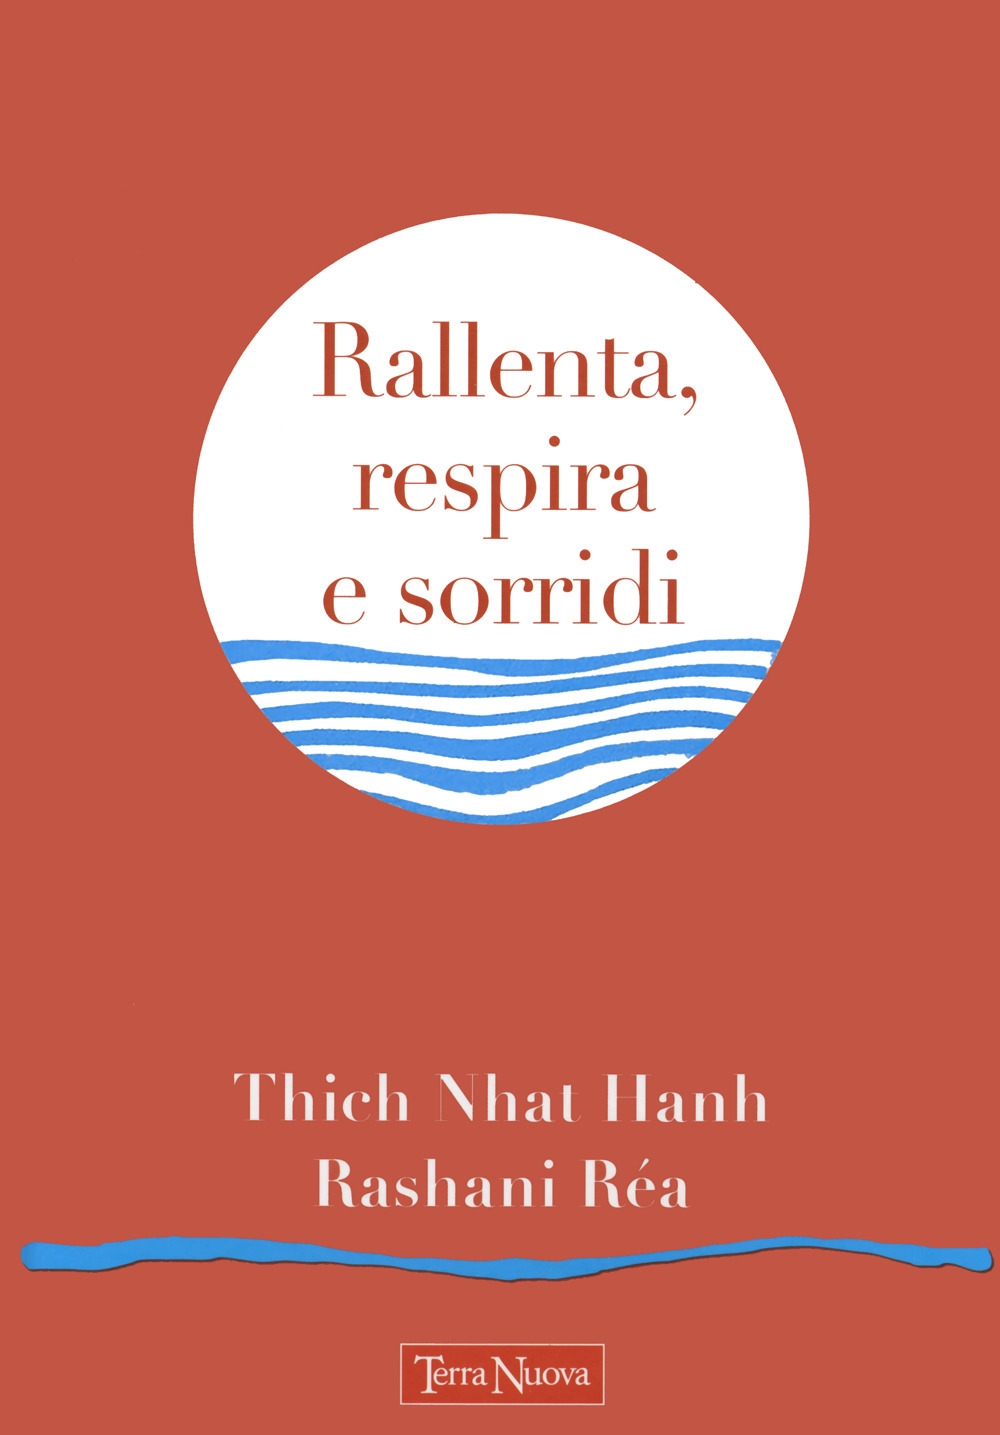 Rallenta, respira e sorridi, Thich Nhat Hanh, Réa Rashani italiani